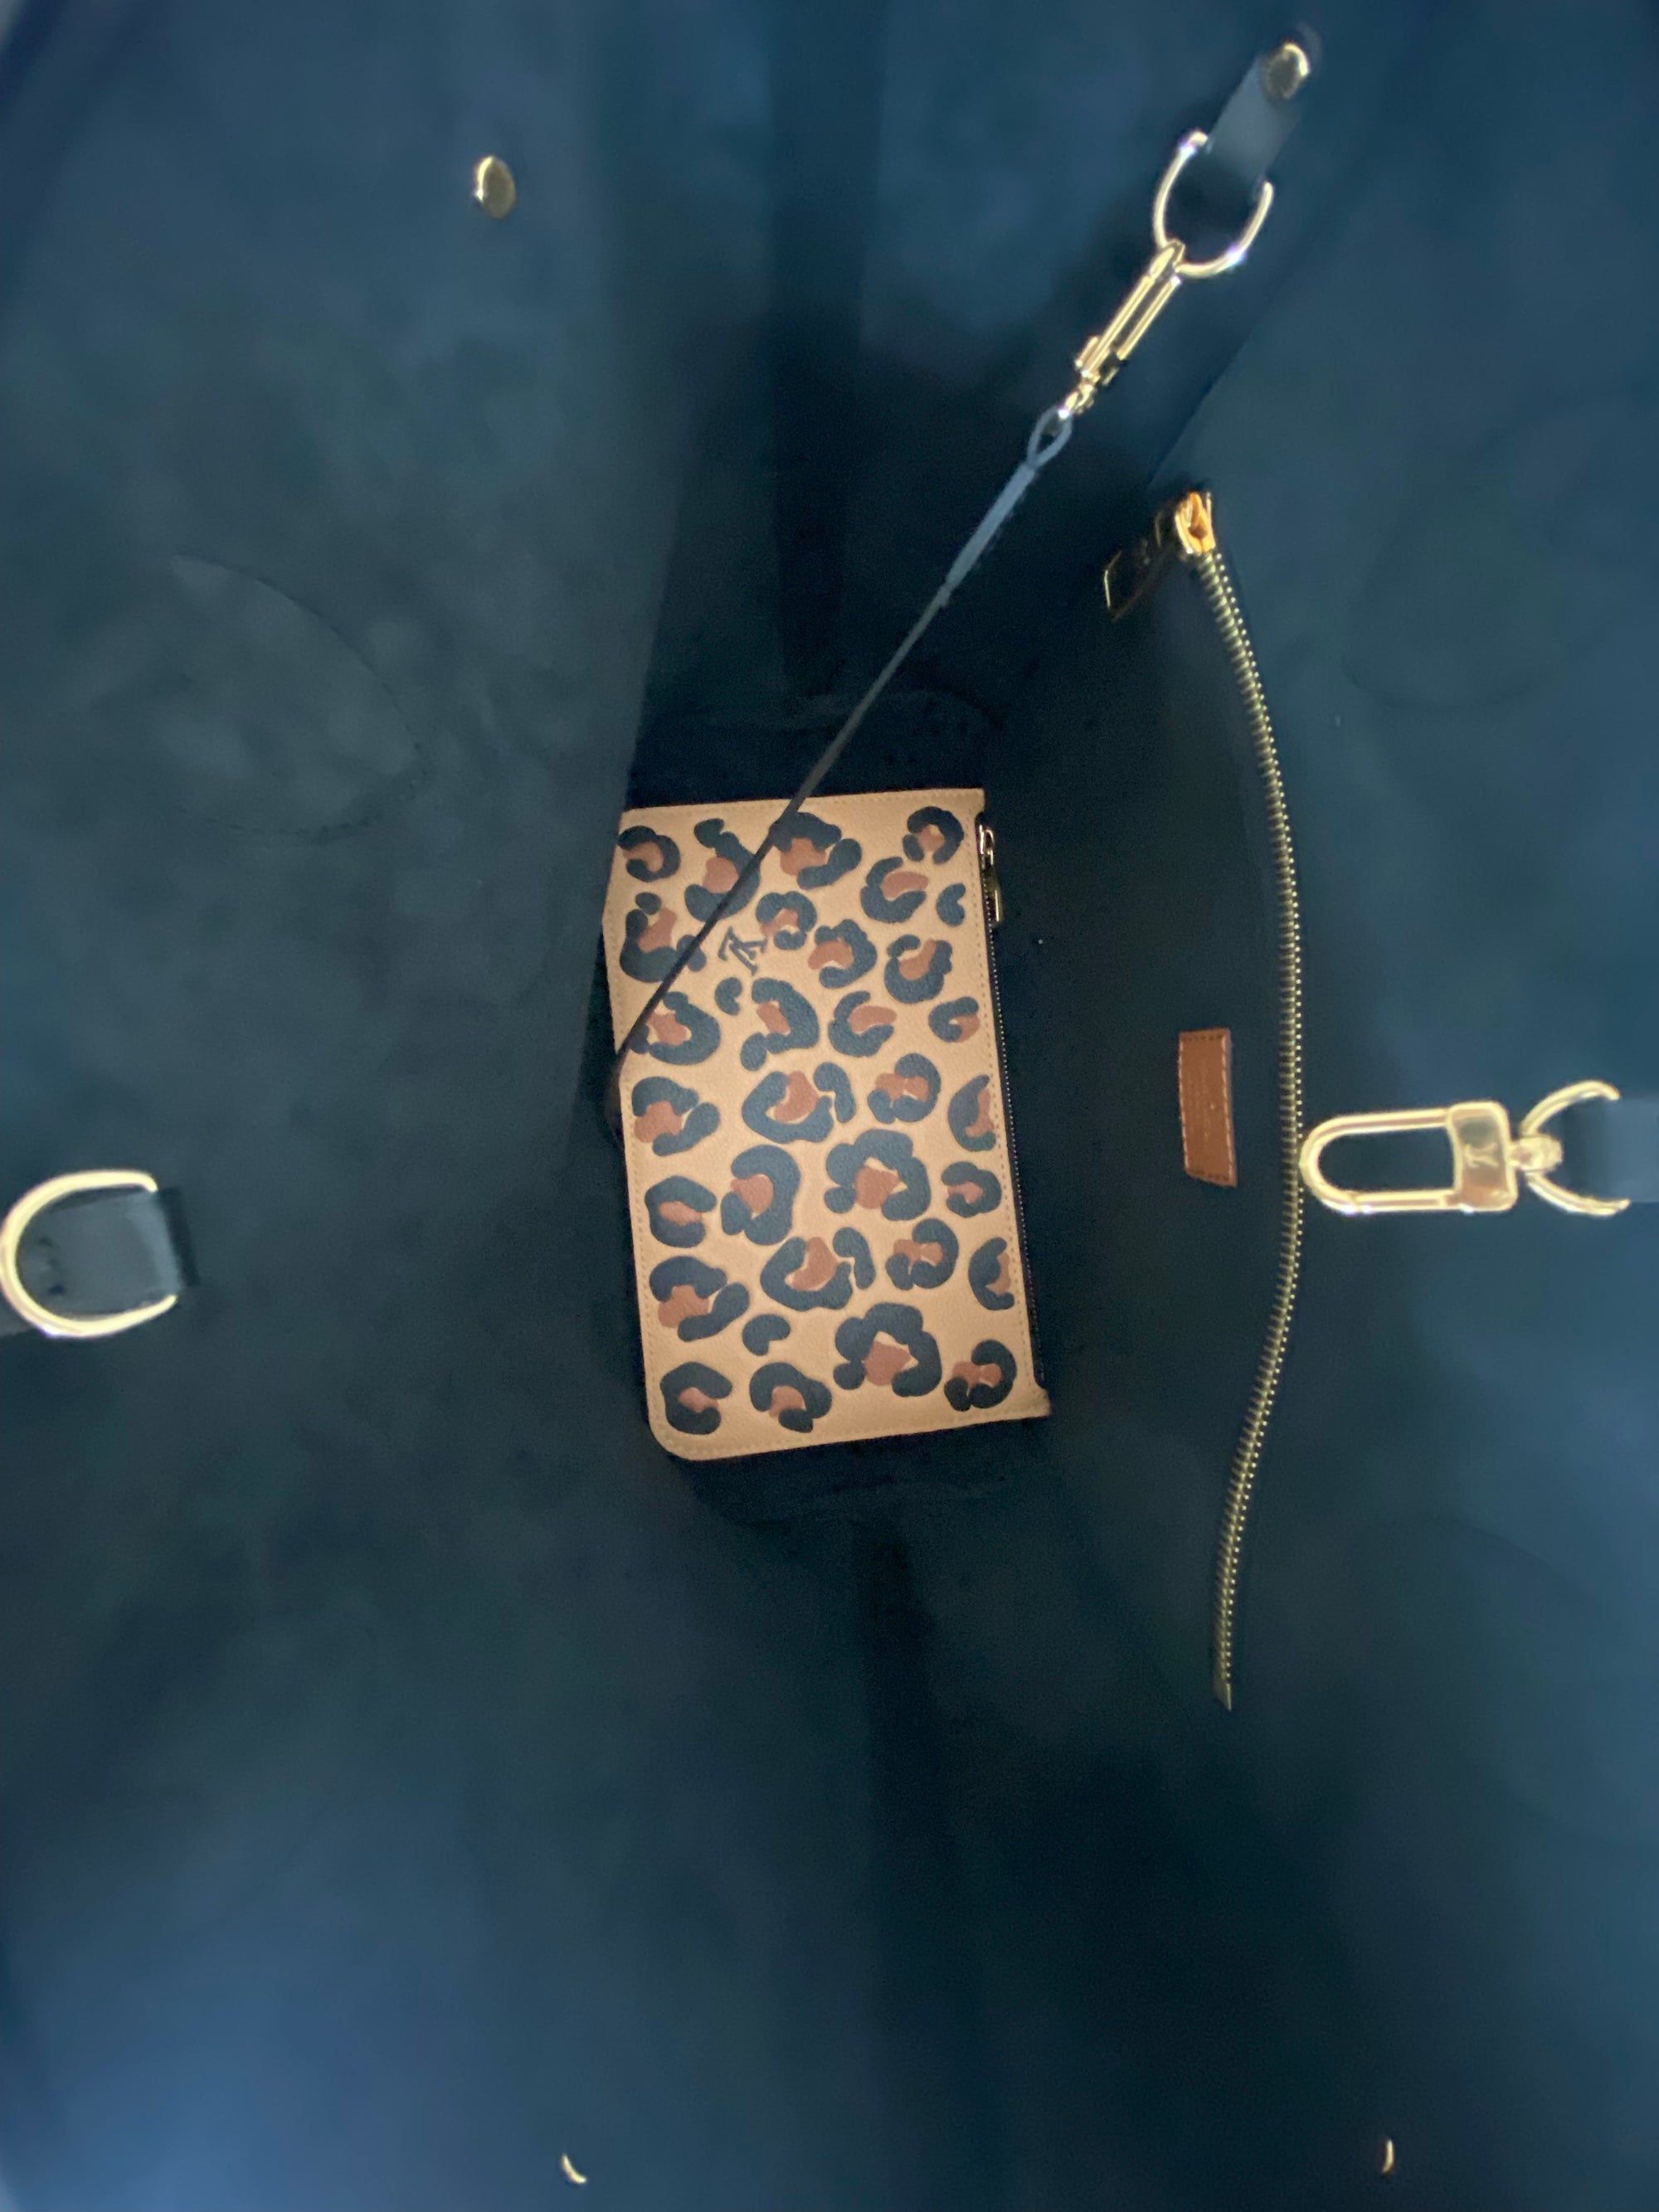 LOUIS VUITTON Neverfull MM Wild at Heart Cheetah Leopard Purse Bag Pouch  Clutch